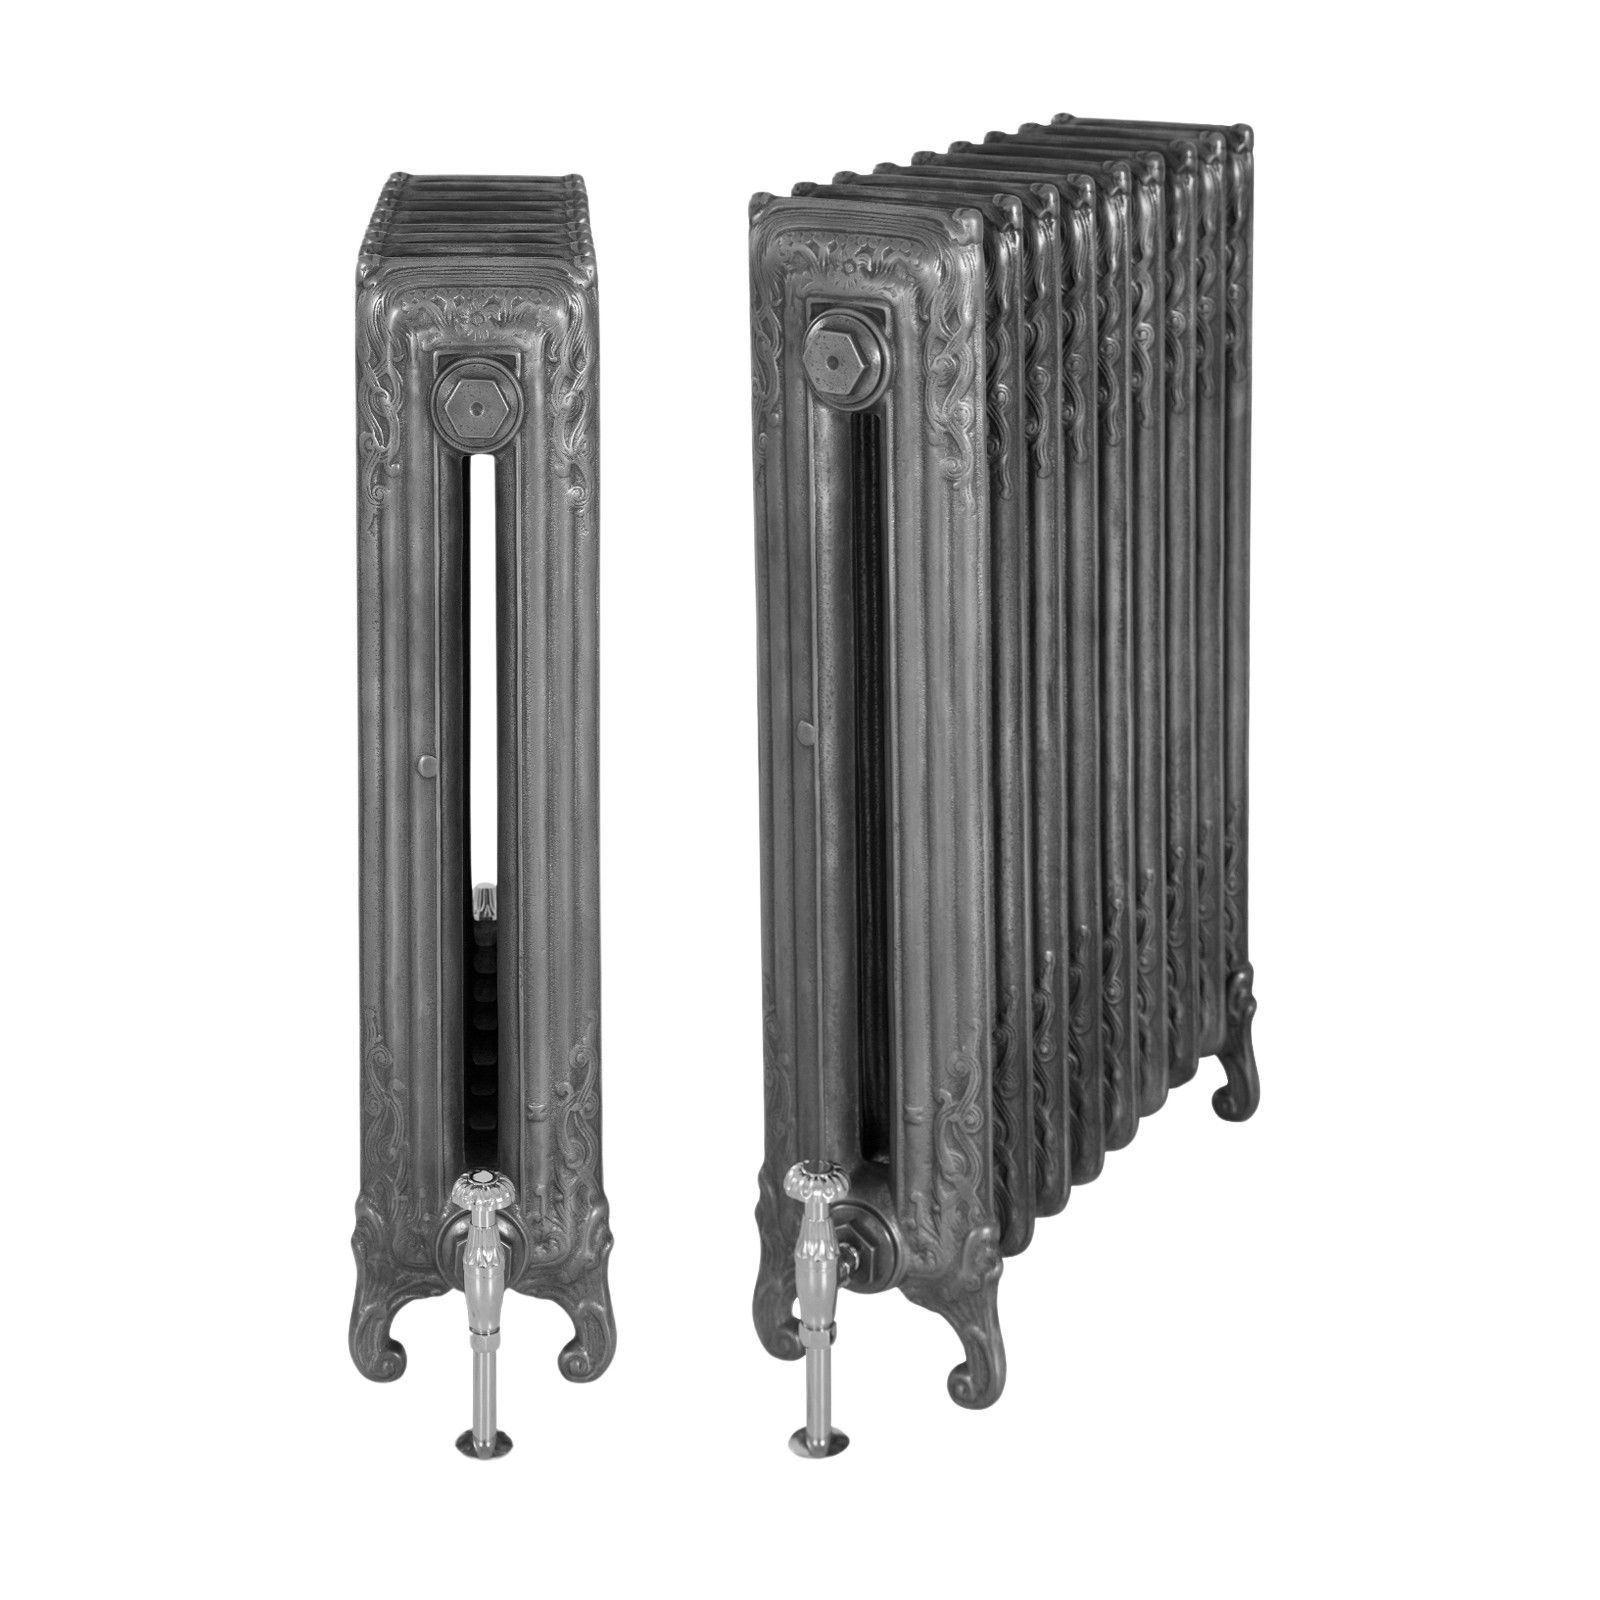 Scrolls radiator 2 columns 845mm high